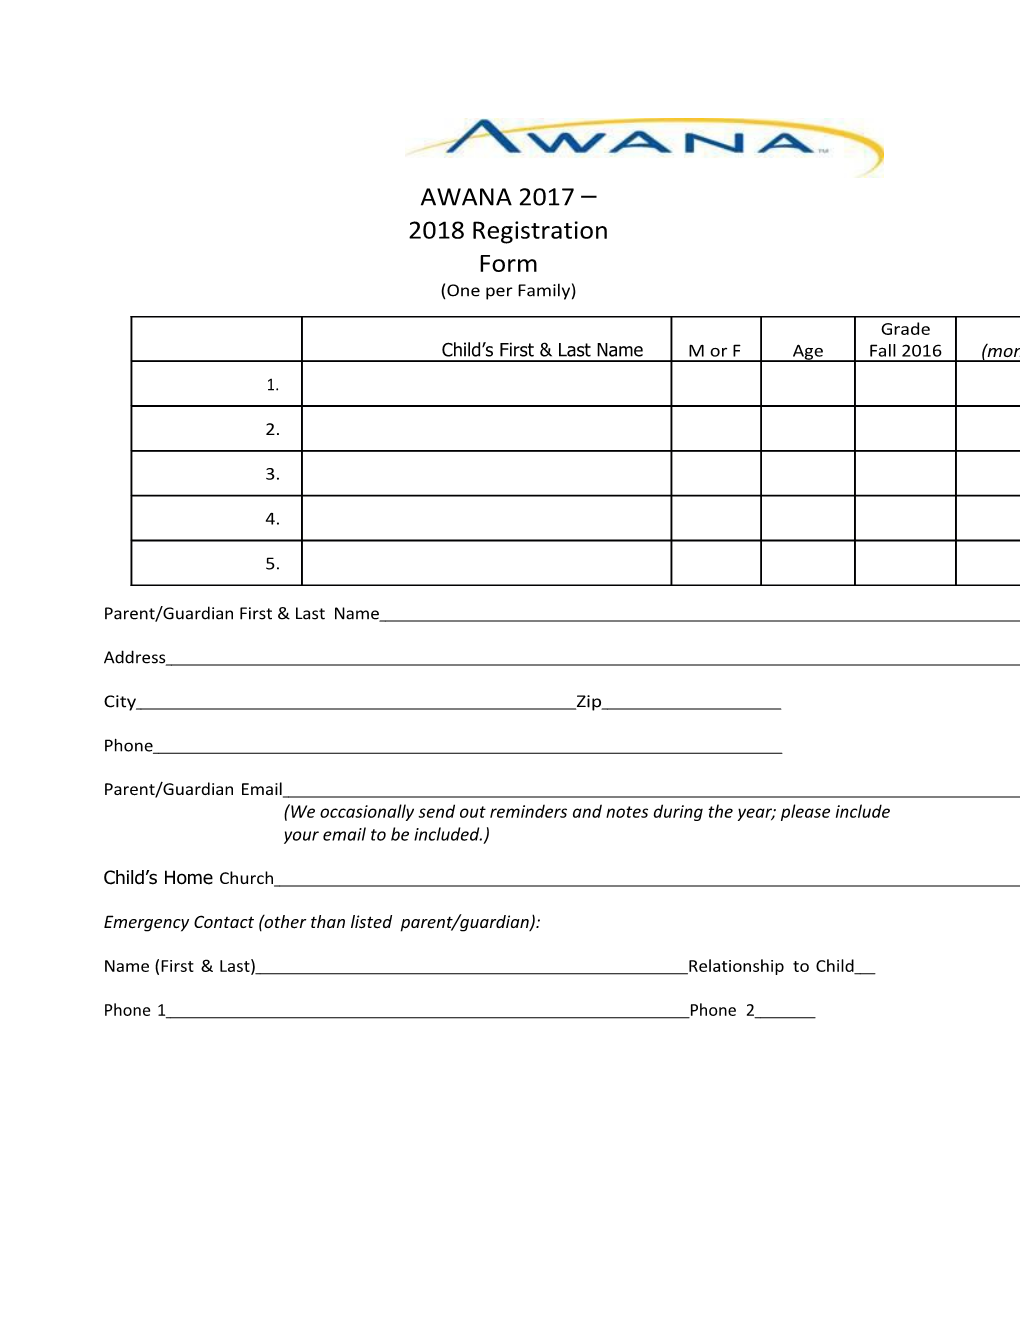 AWANA 2017 2018 Registration Form